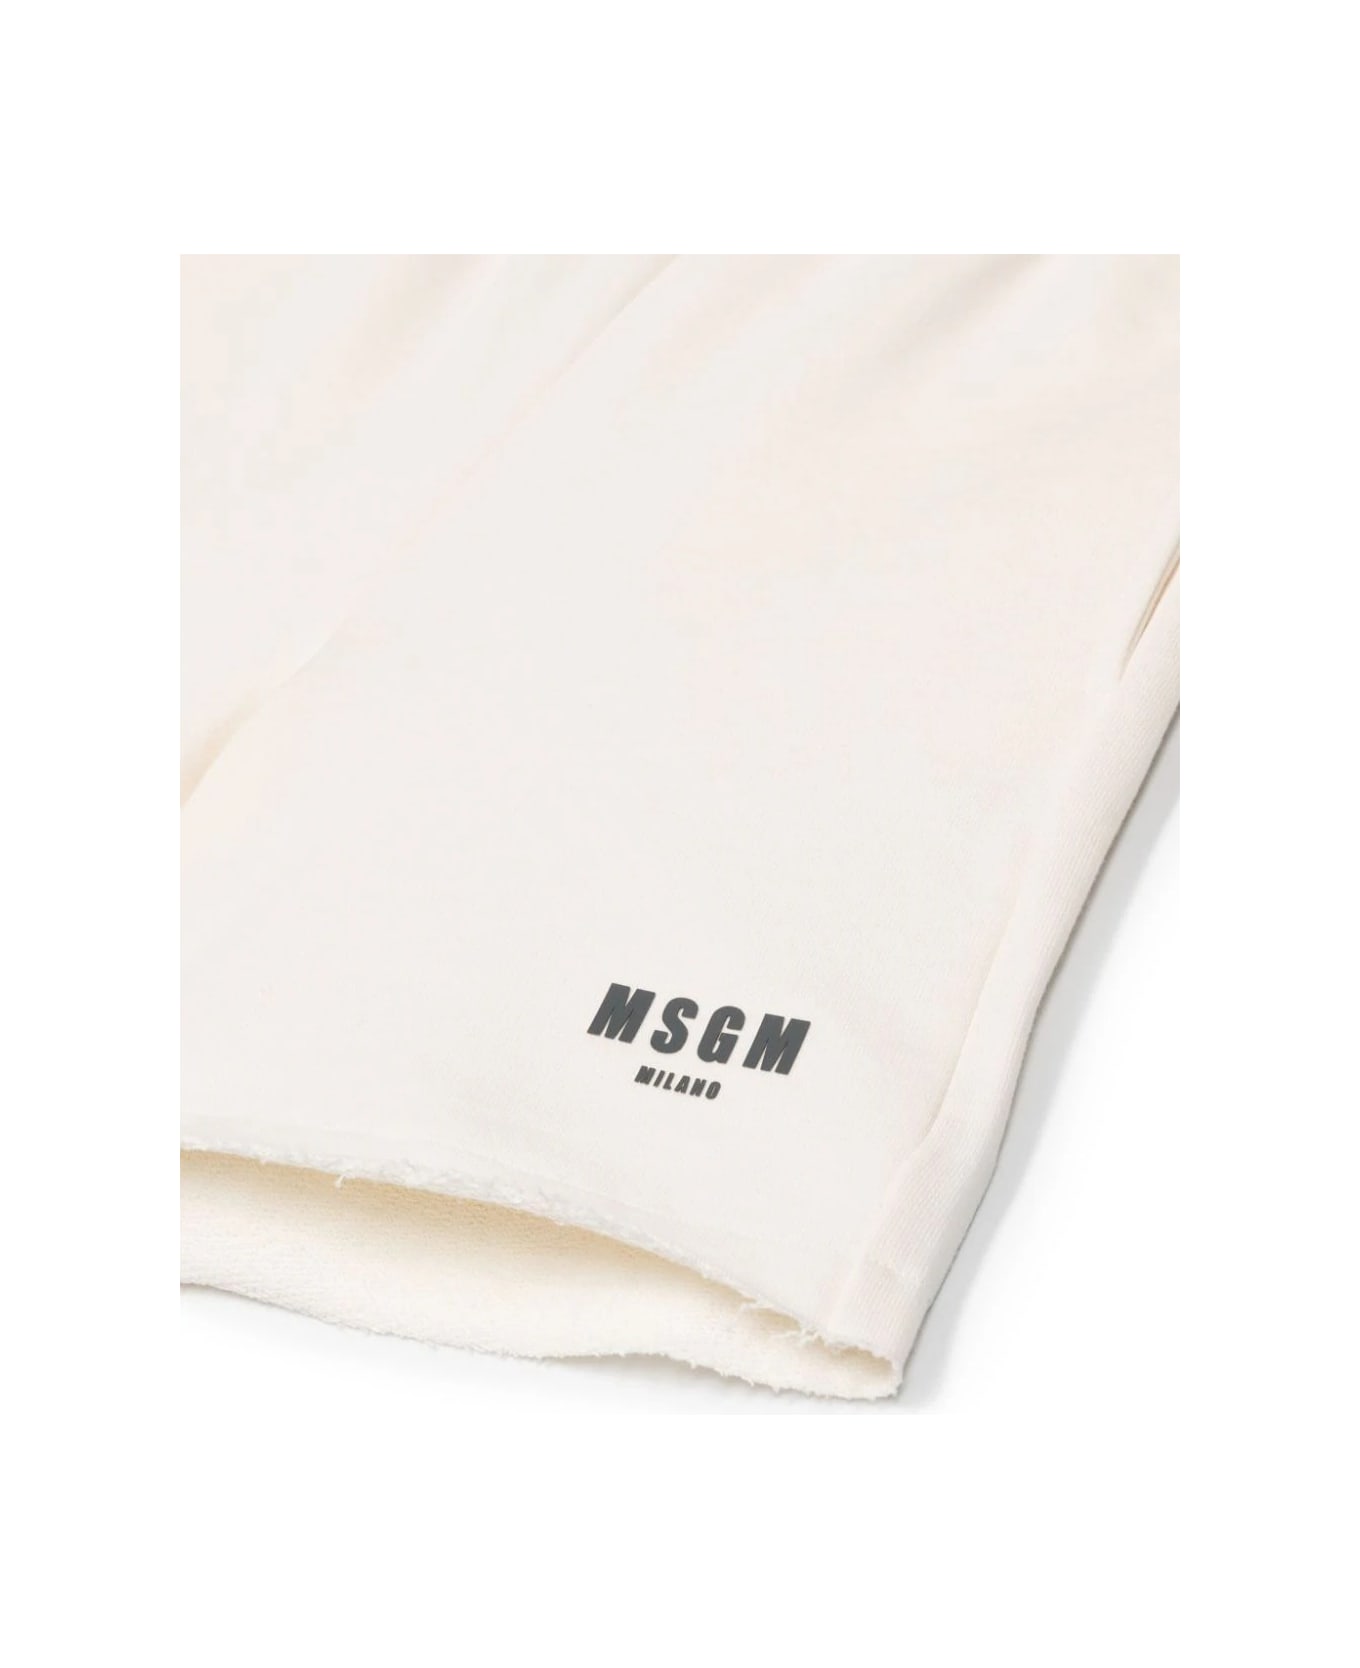 MSGM Cream Shorts With Logo And Drawstring - White ボトムス